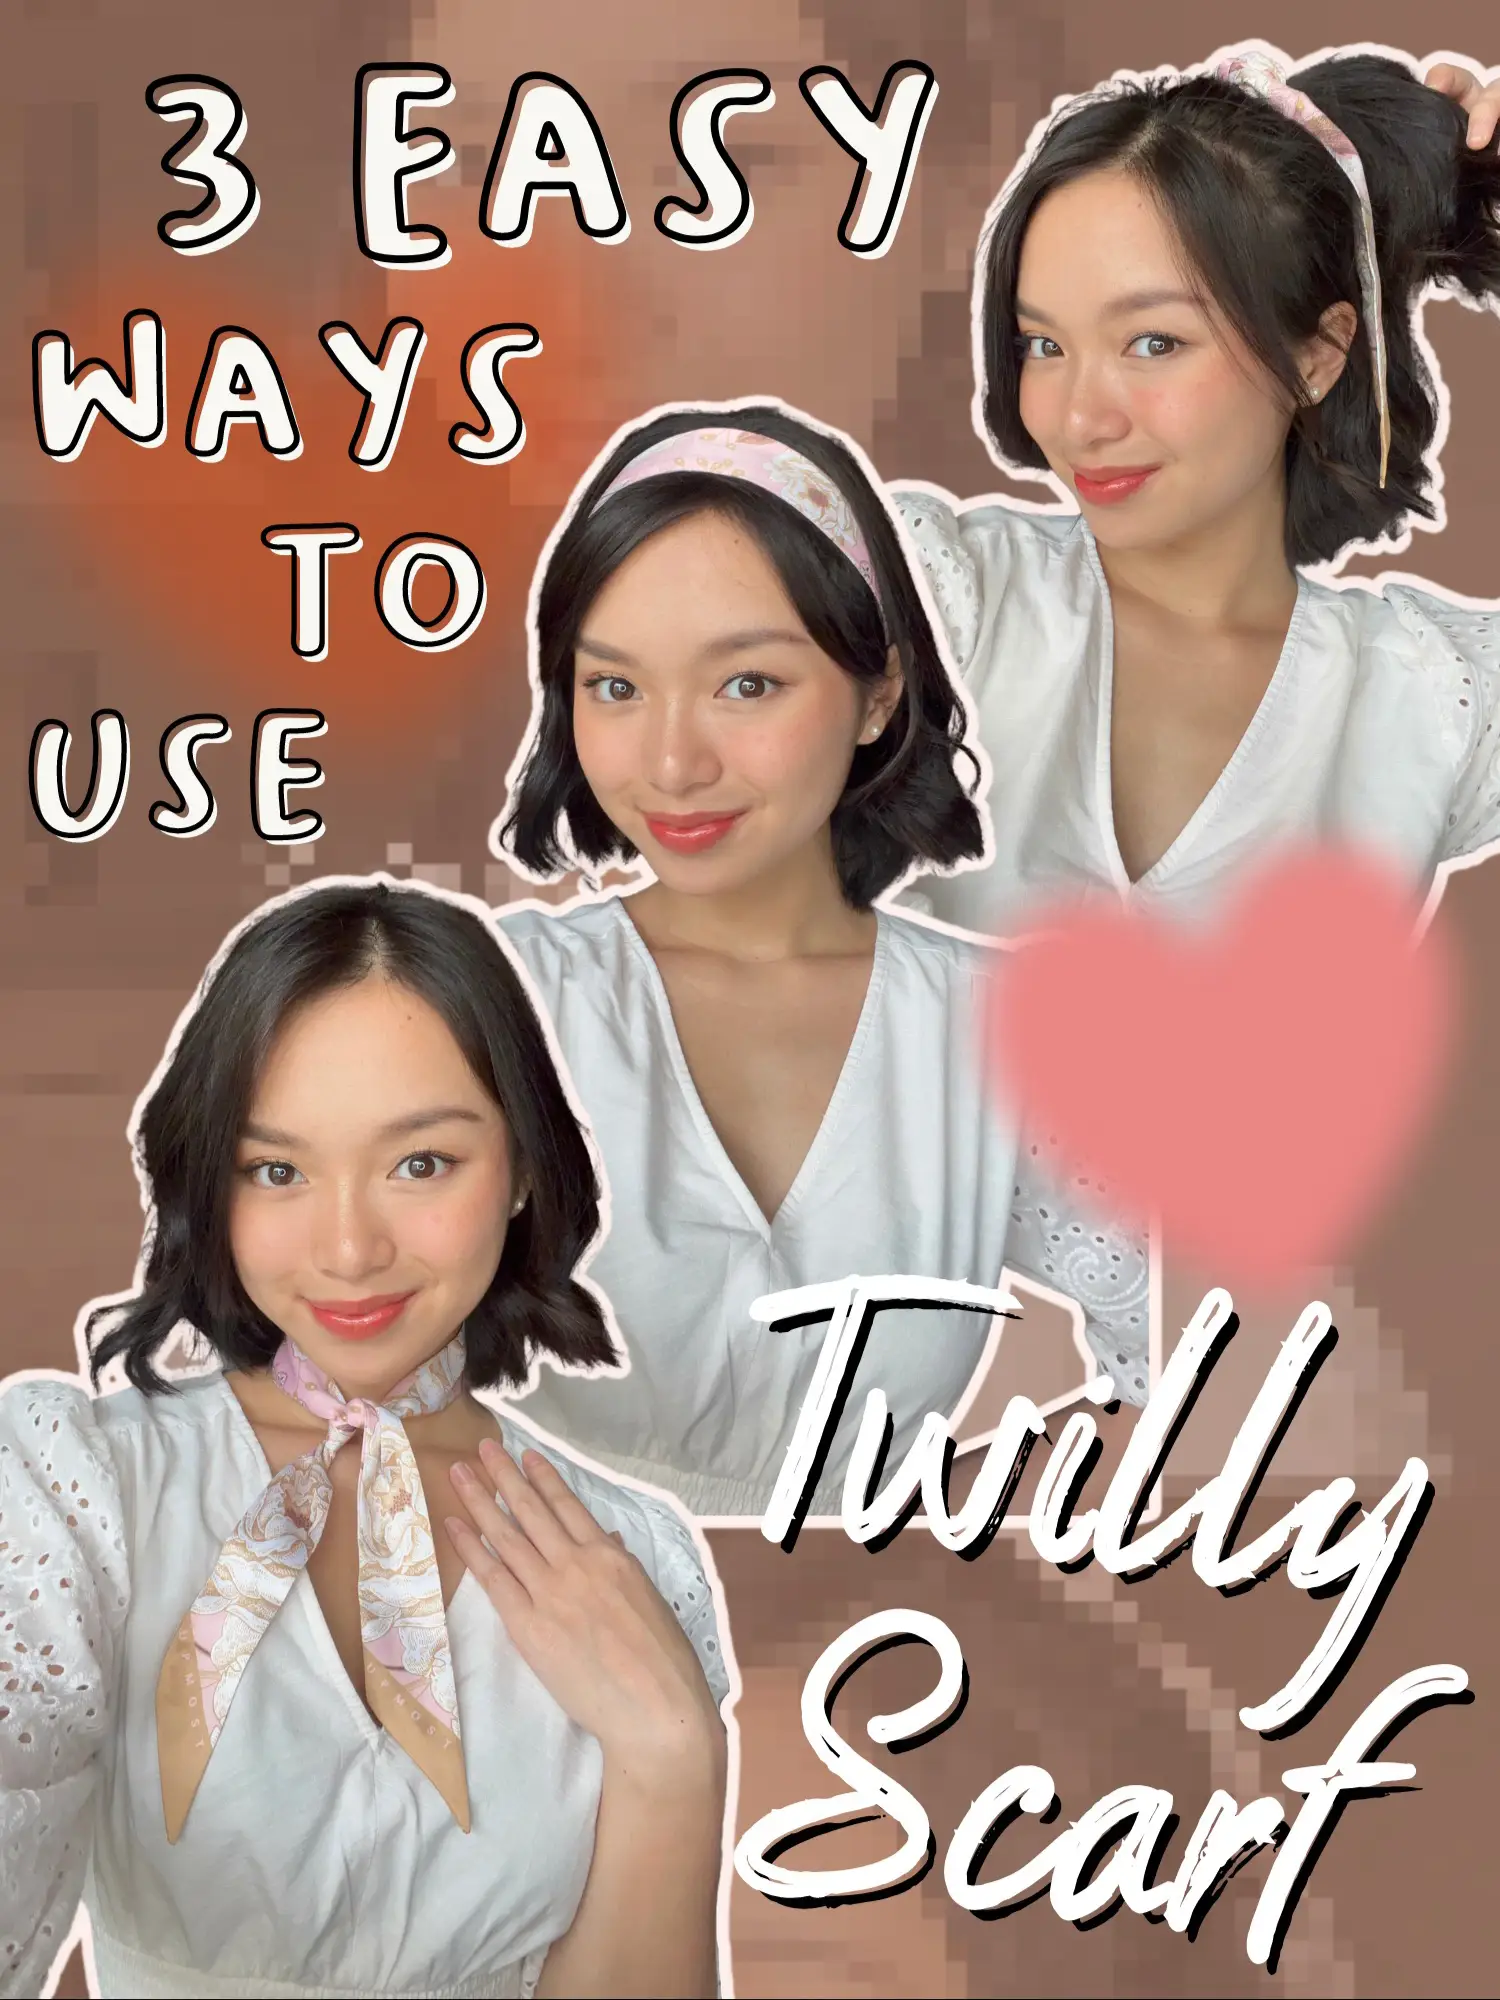 3 ways to tie TWILLY!, Artikel disiarkan oleh Odelia Catalina